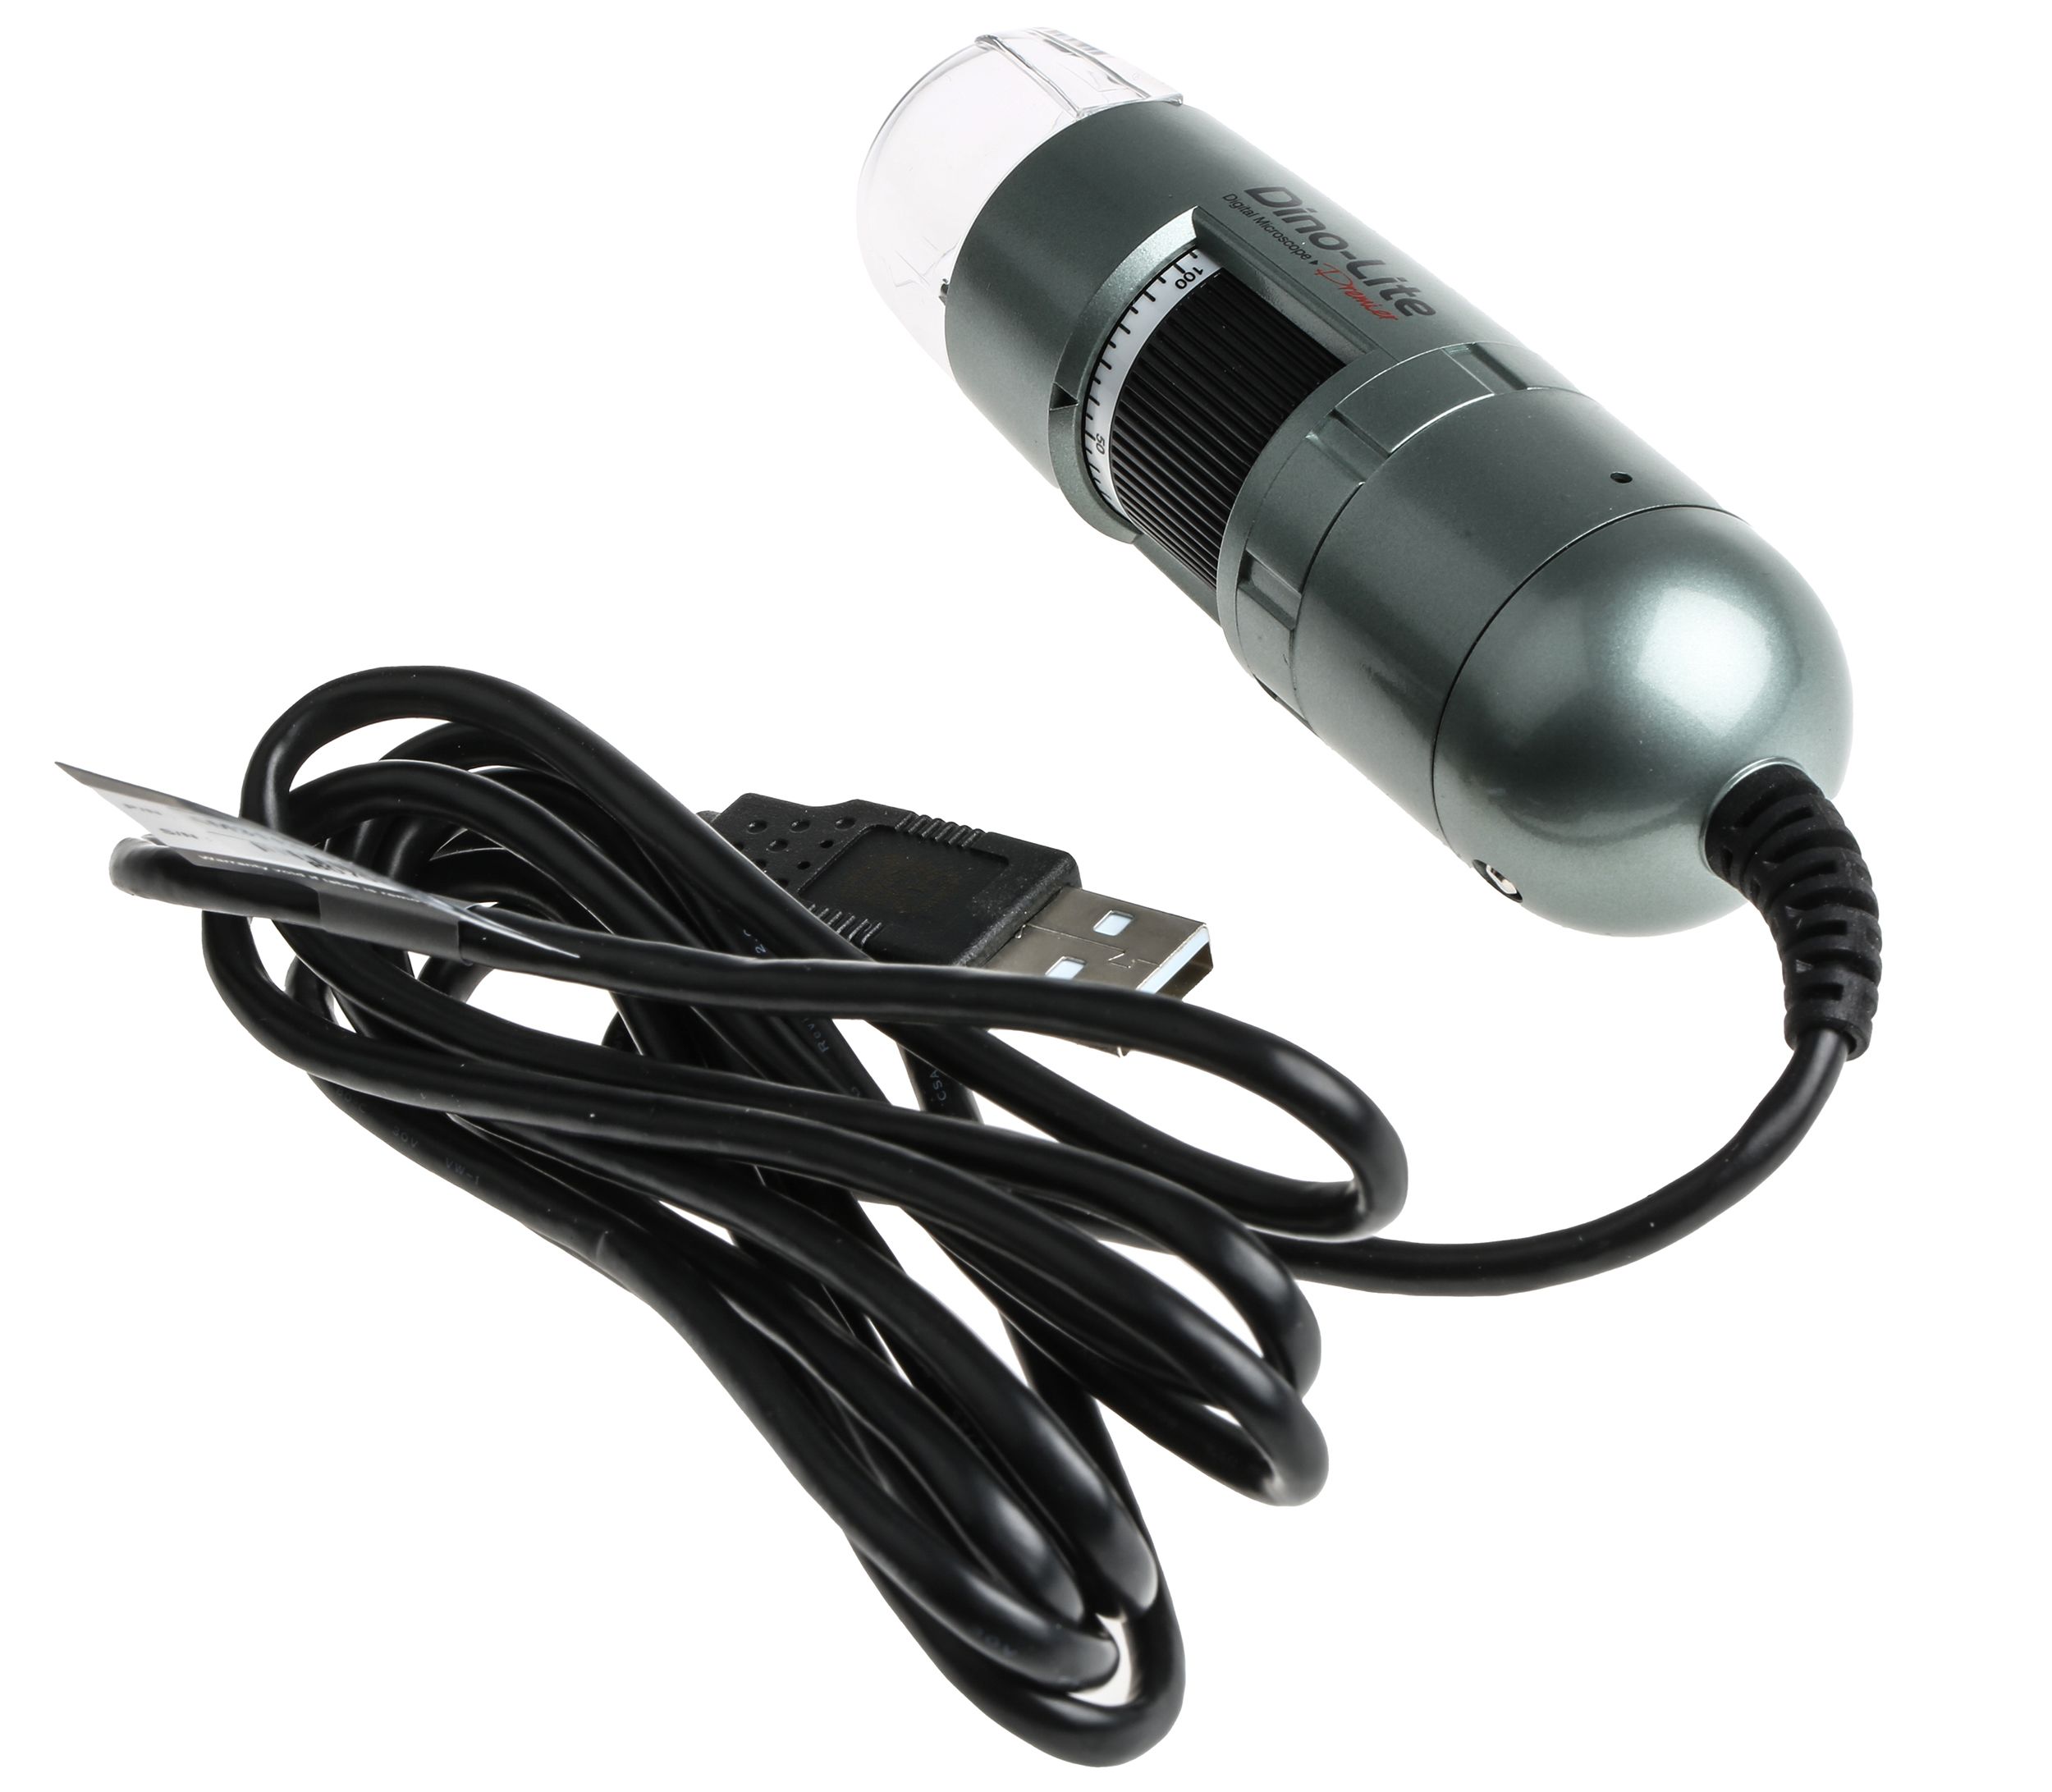 Dino-Lite AM3113T USB USB Microscope, 640 x 480 pixel, 200X Magnification